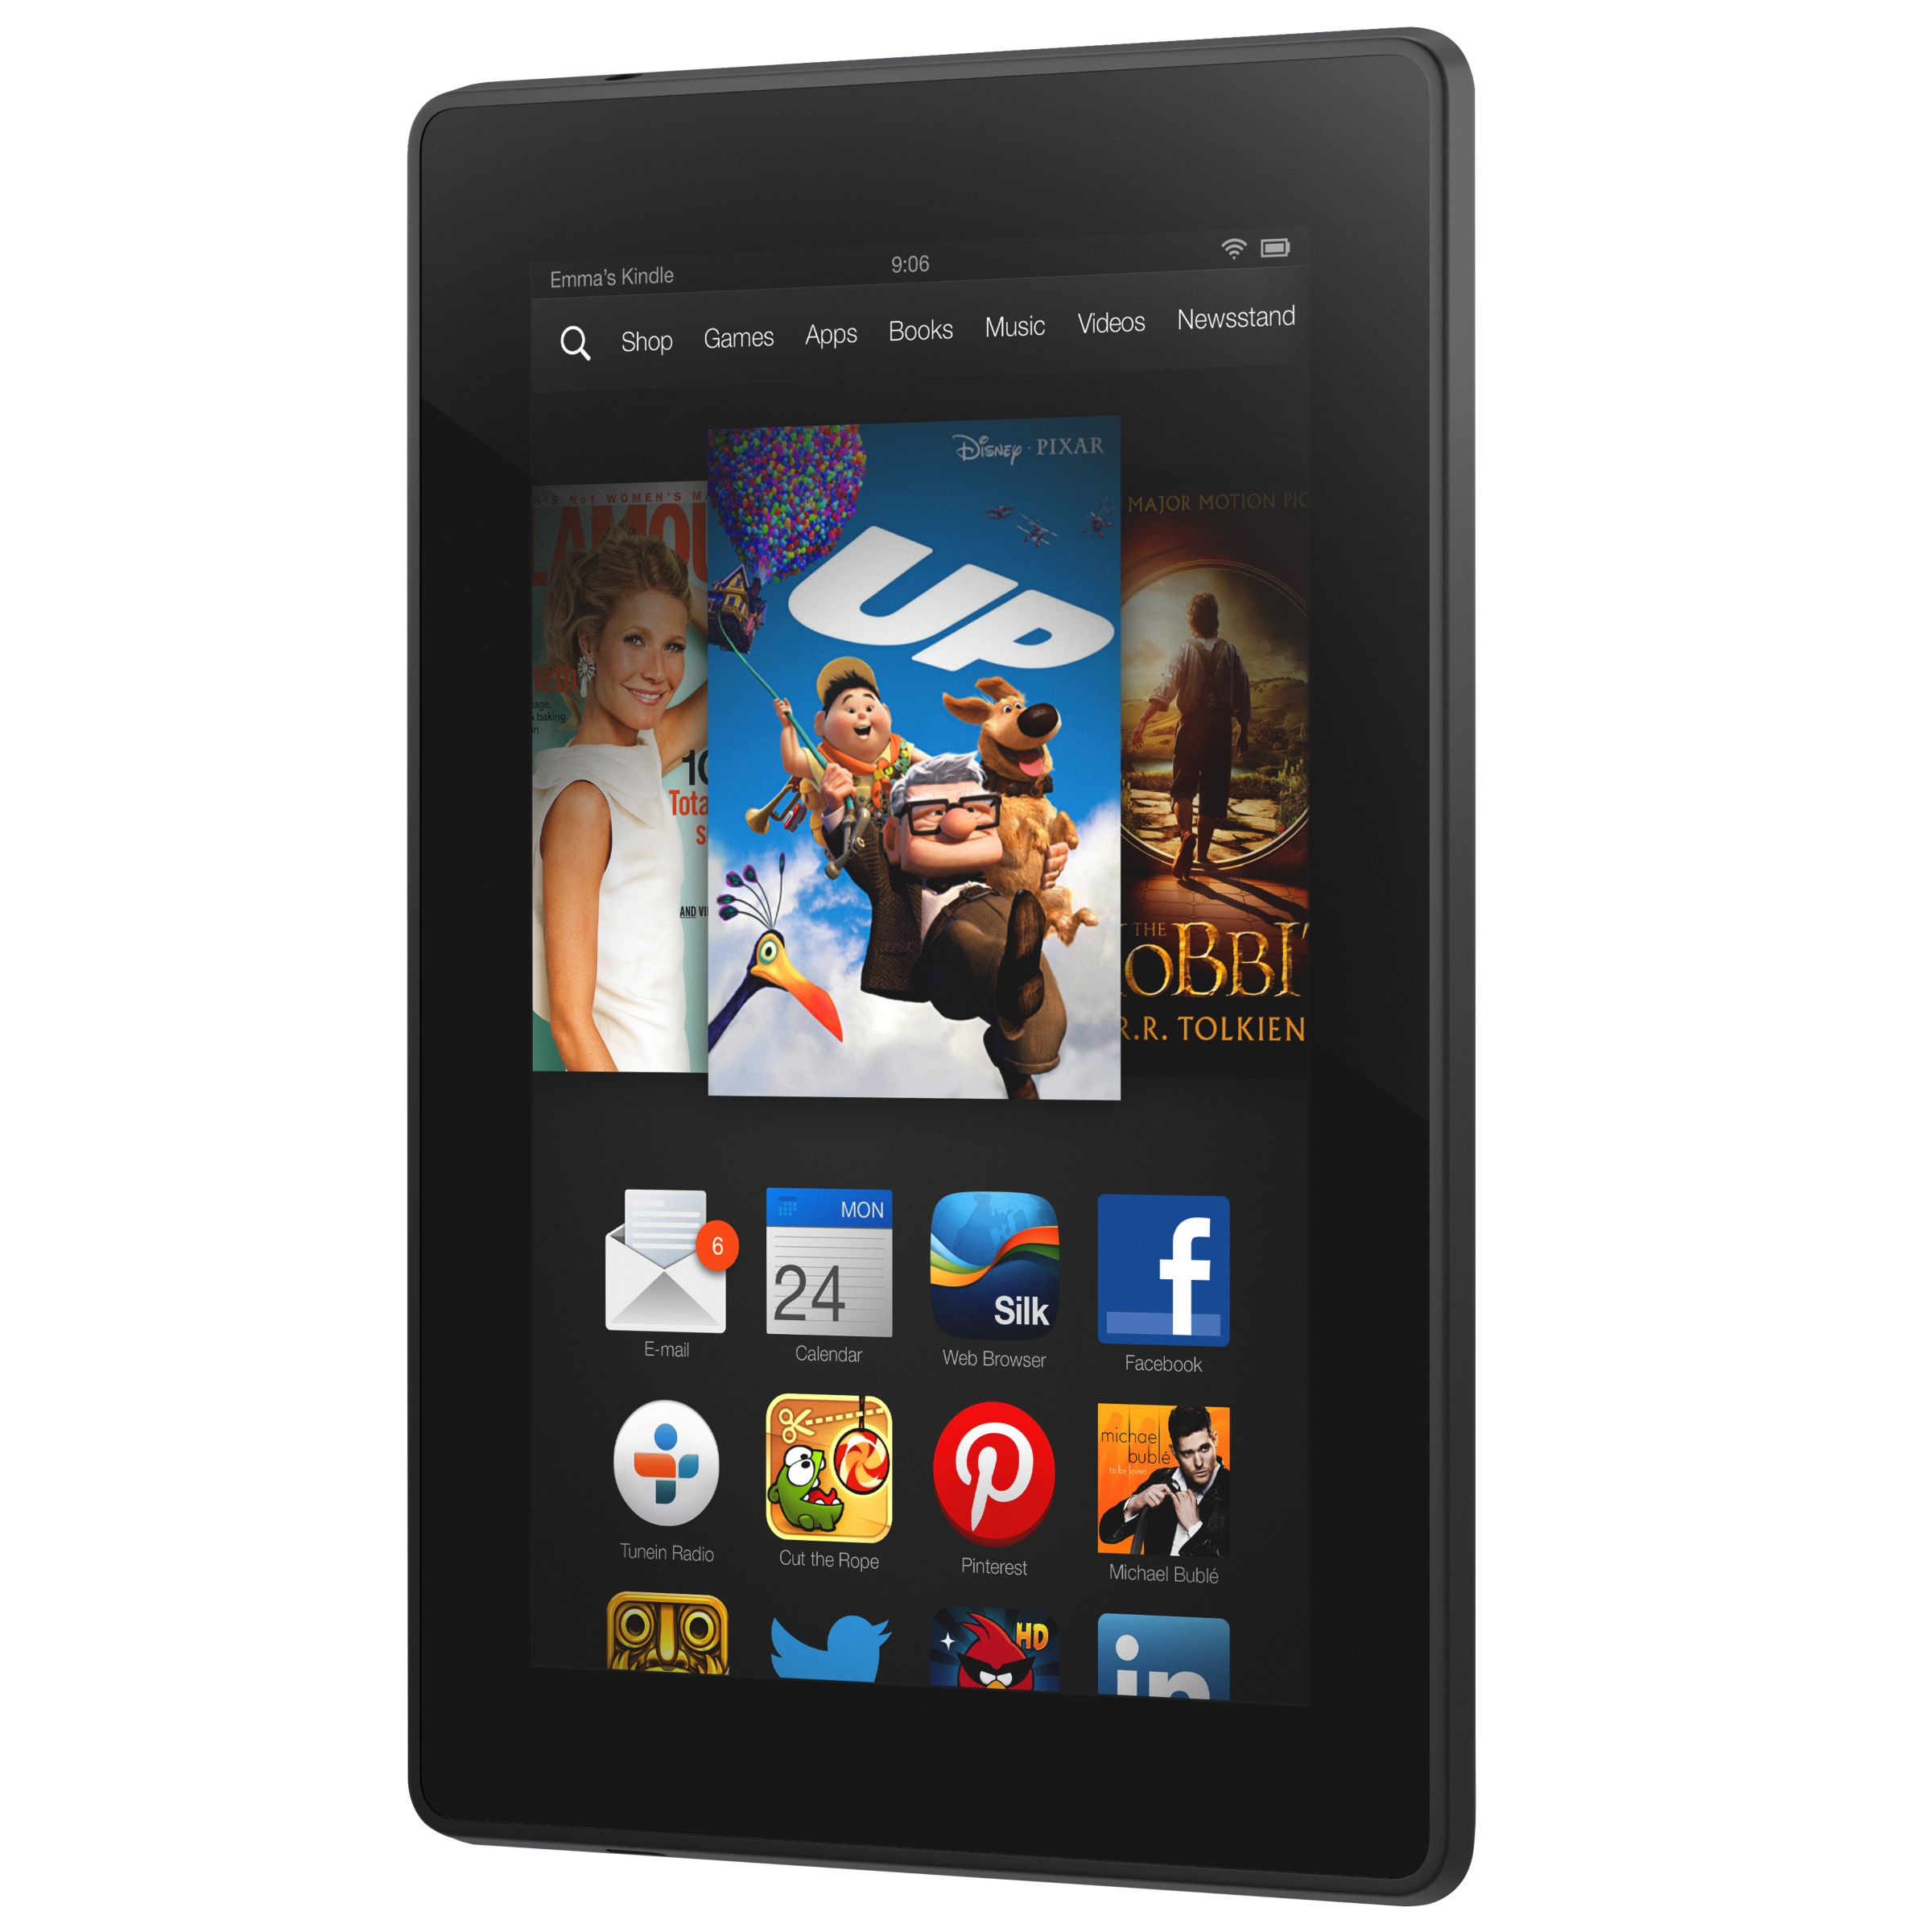 Amazon Kindle Fire Hd Tablet Ti Omap Fire Os 7 8gb Black At John